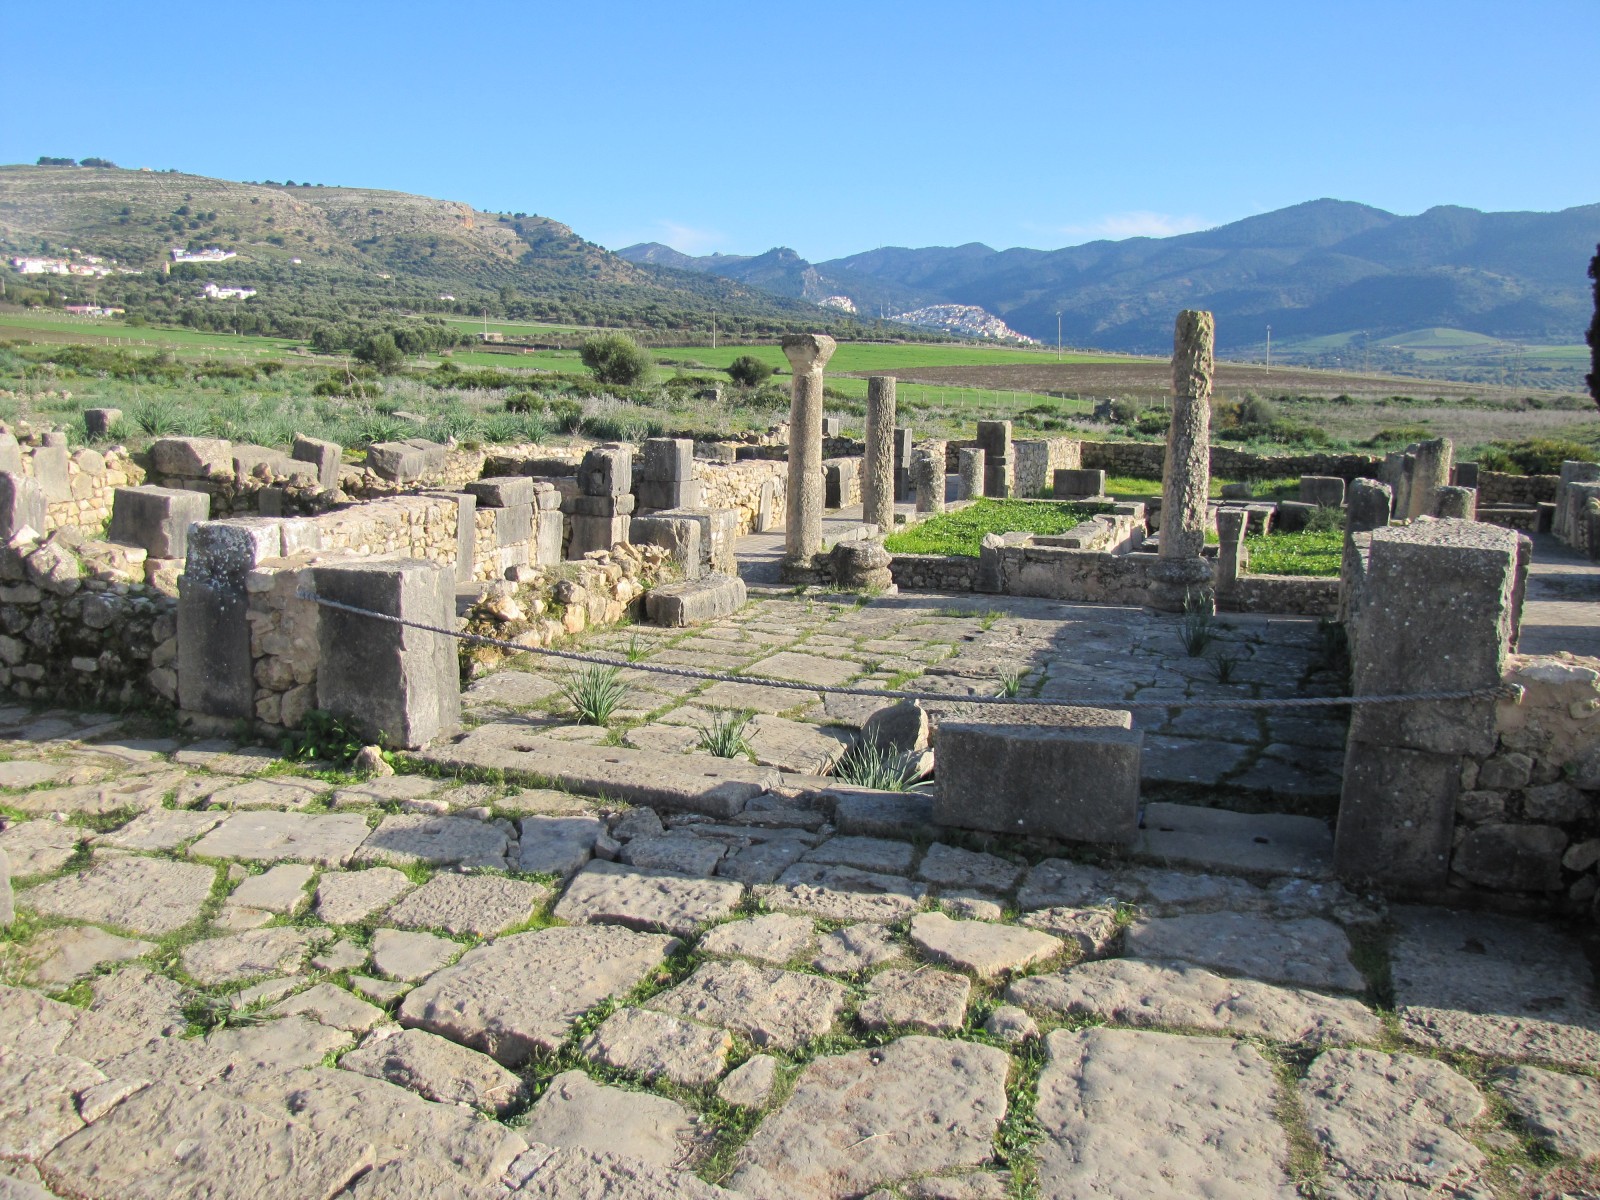 Roman ruins at Volubilis, Morocco - Trevor's Travels